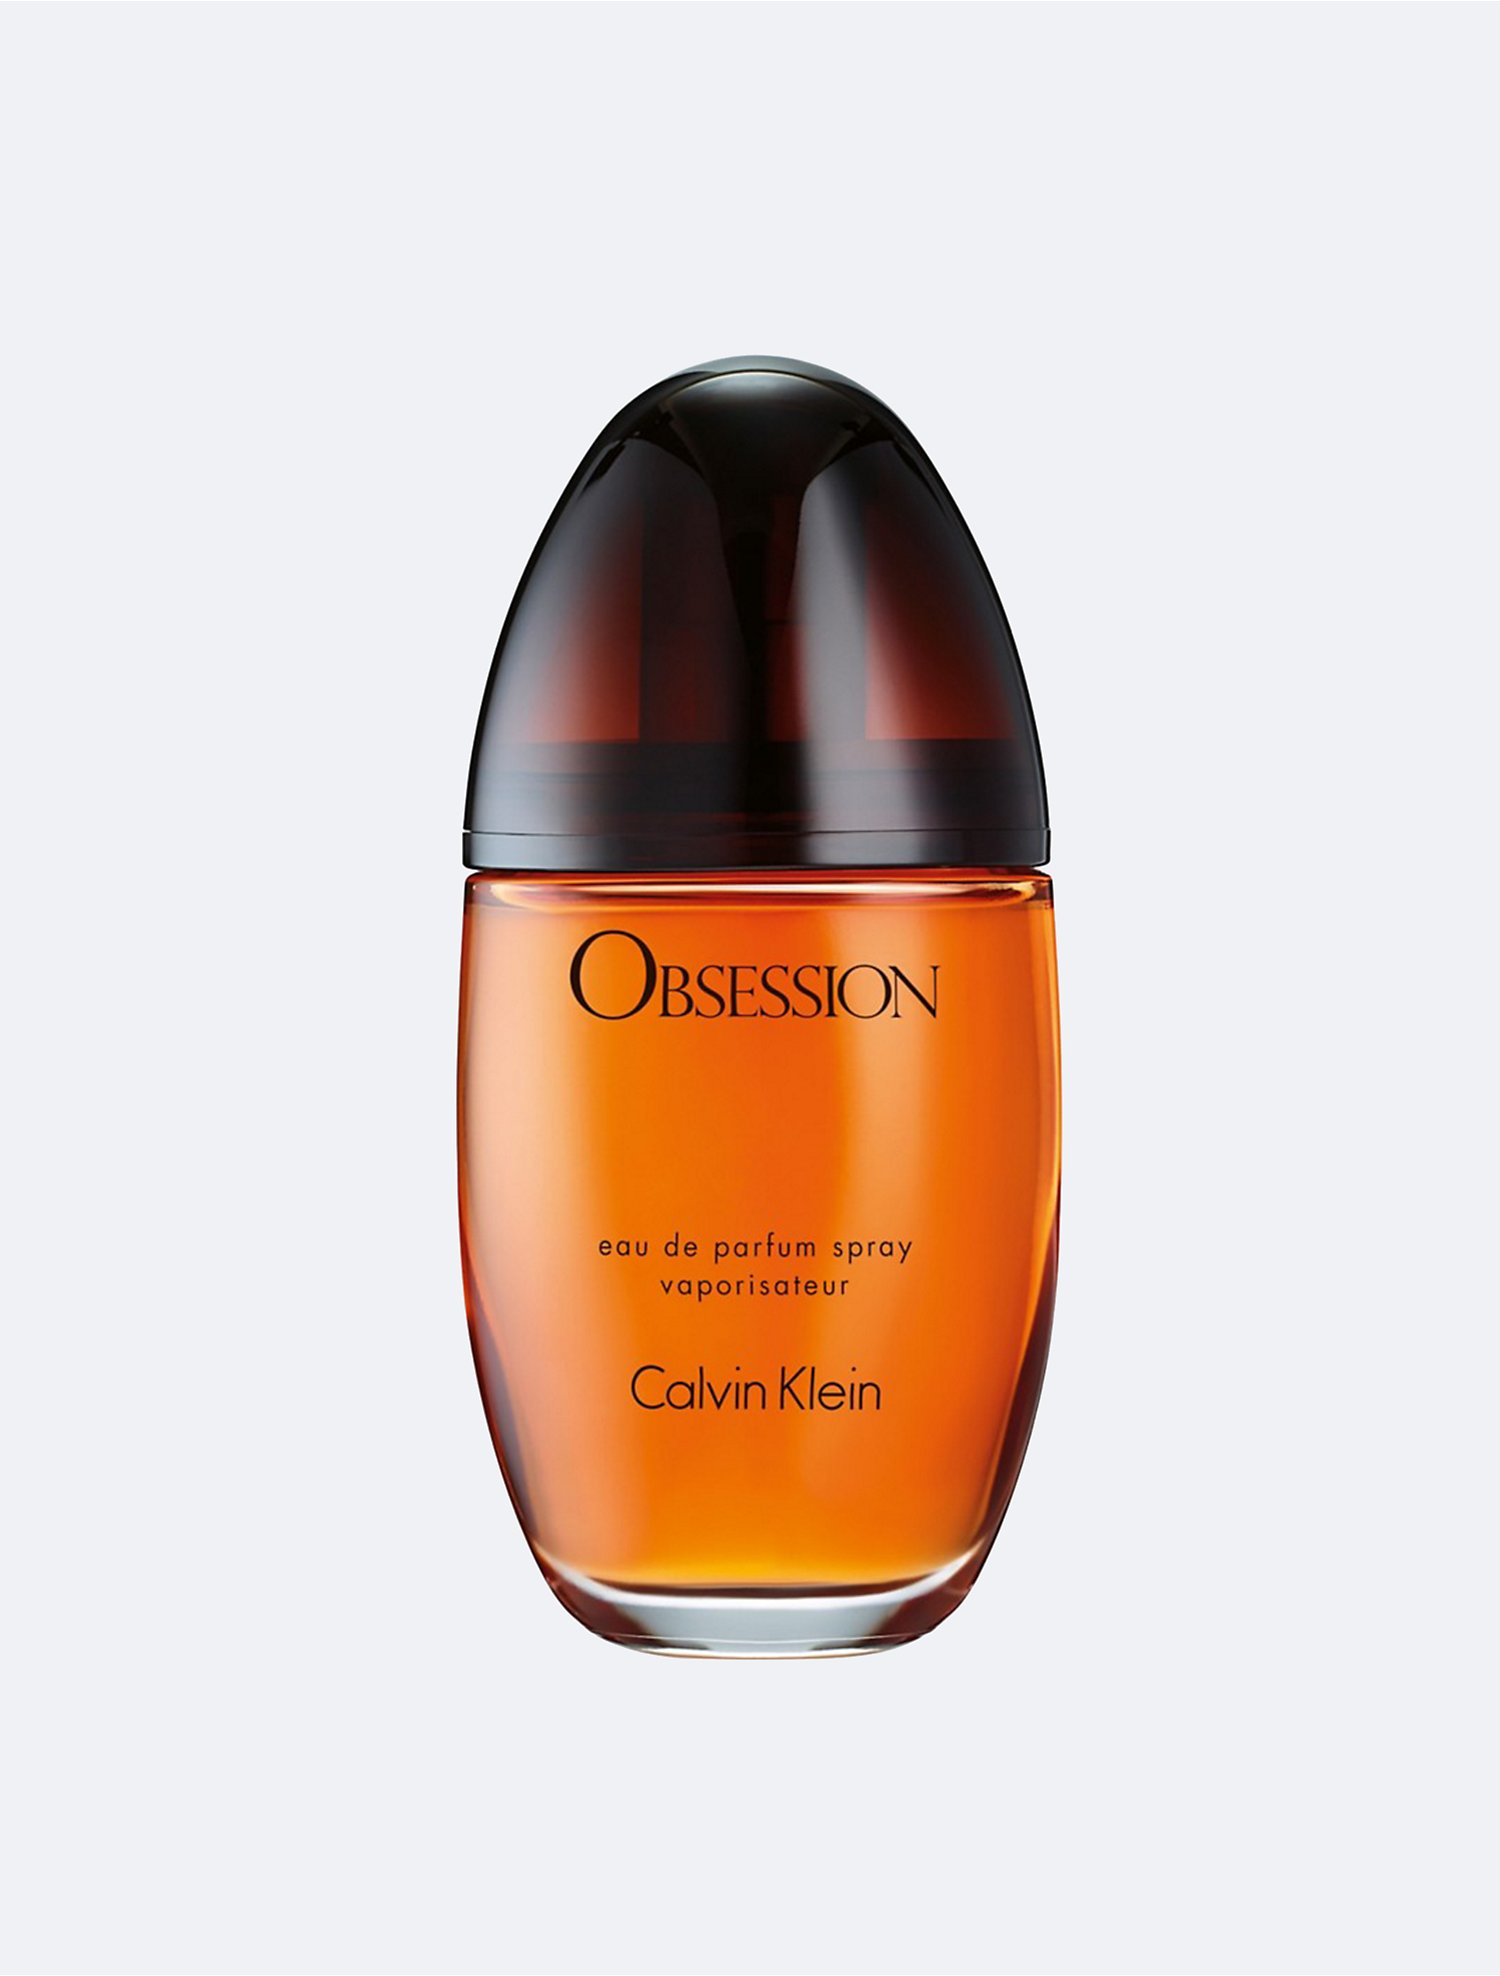 Dead in the world Semblance bound Obsession Eau De Parfum For Women | Calvin Klein